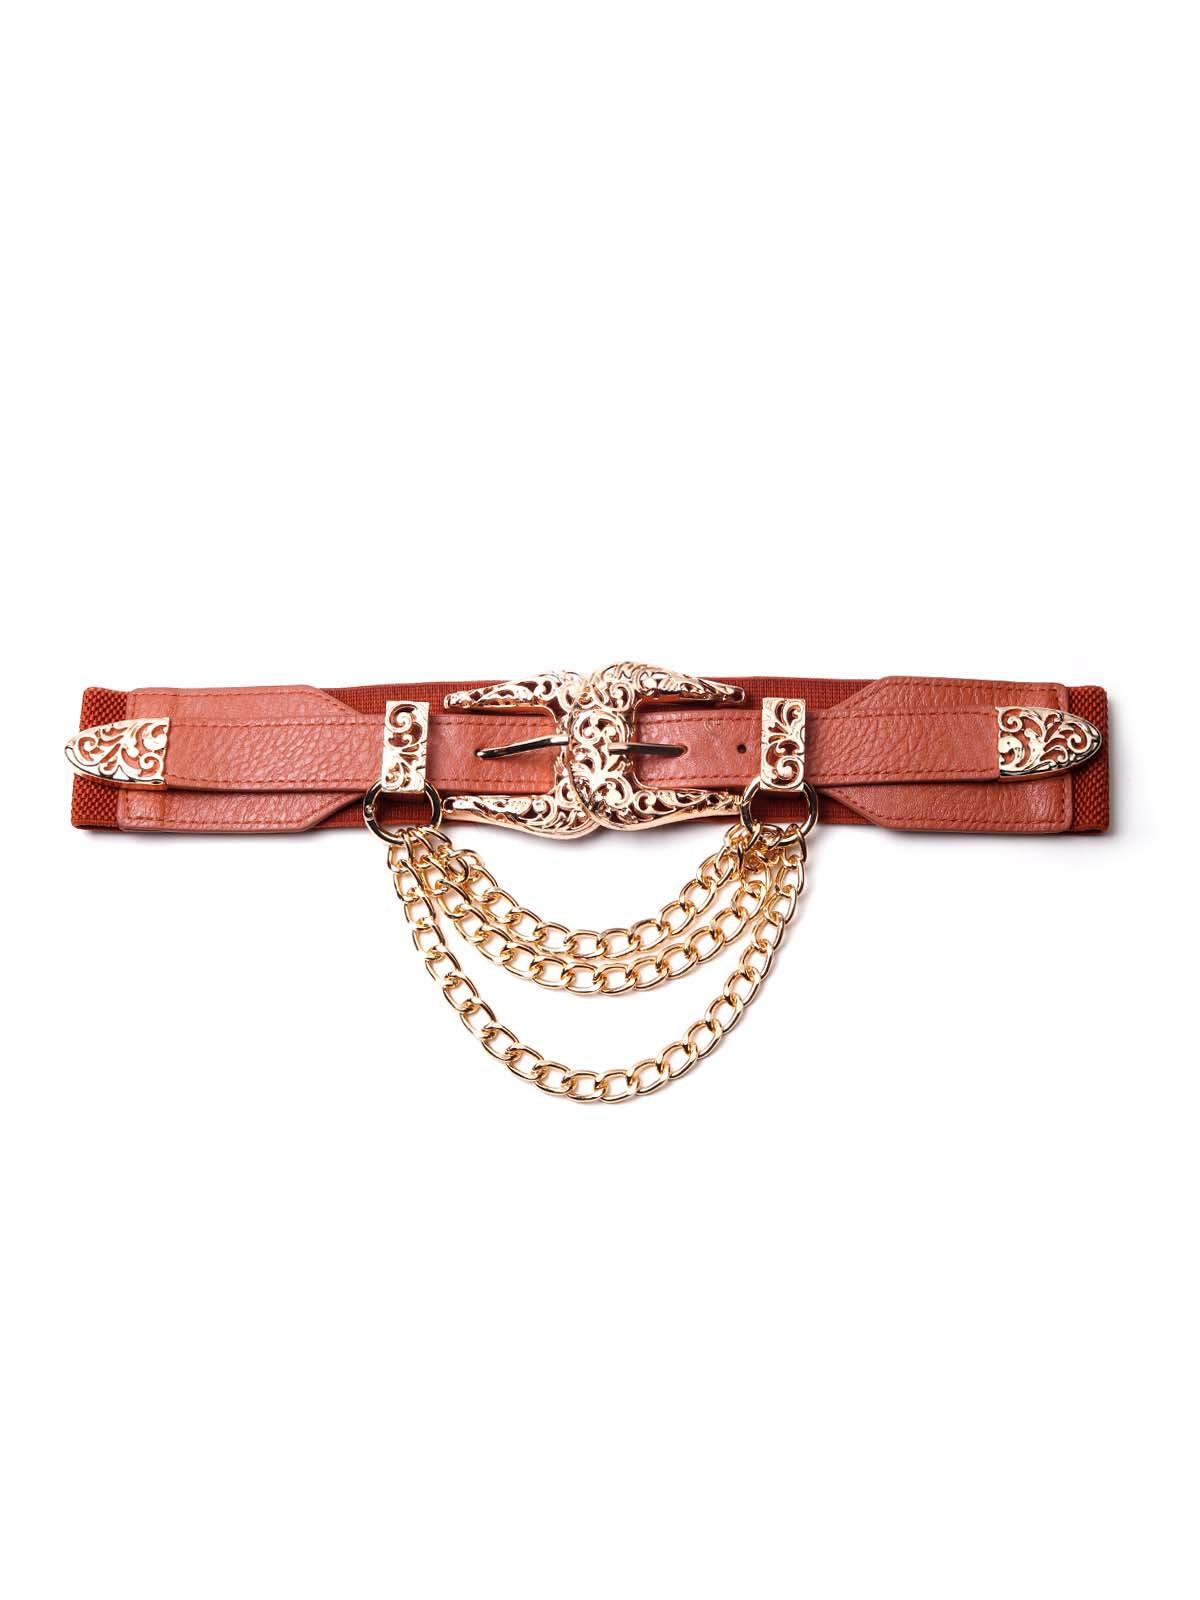 Tan belt adorned with a golden chain - Odette